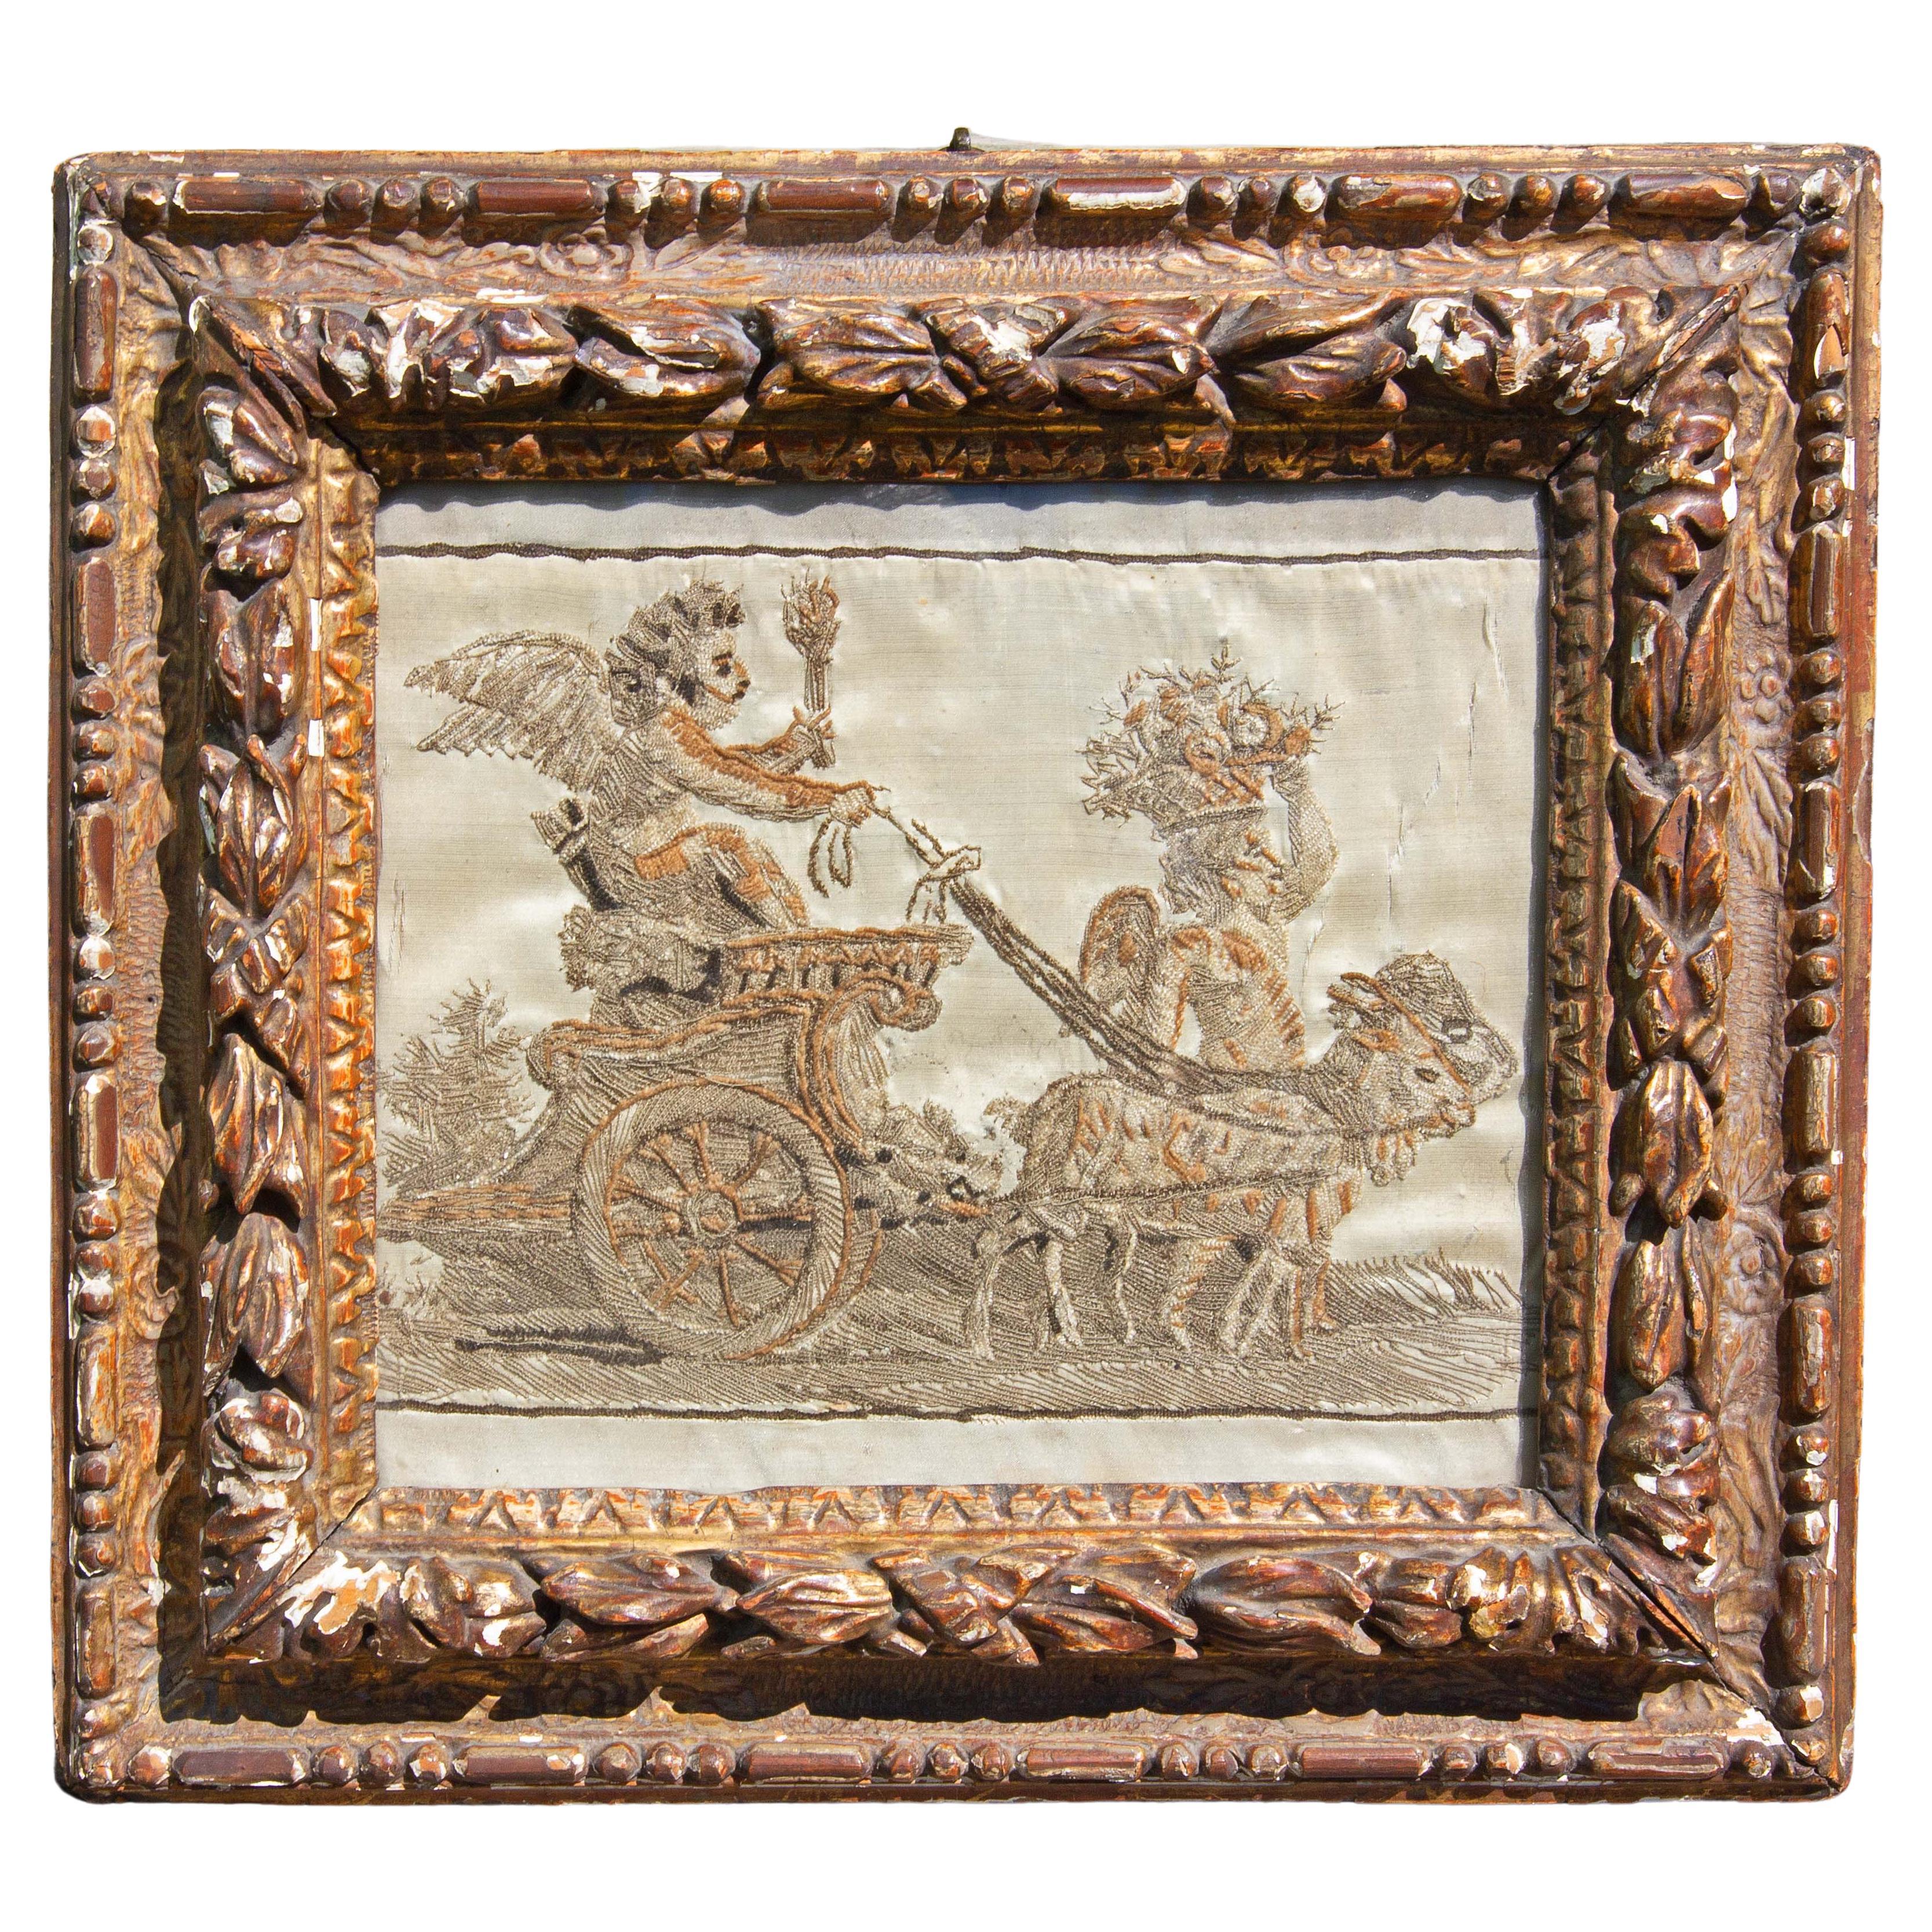 18th Century Italian Framed Silk Embroidery of a Cherub Riding a Chariot